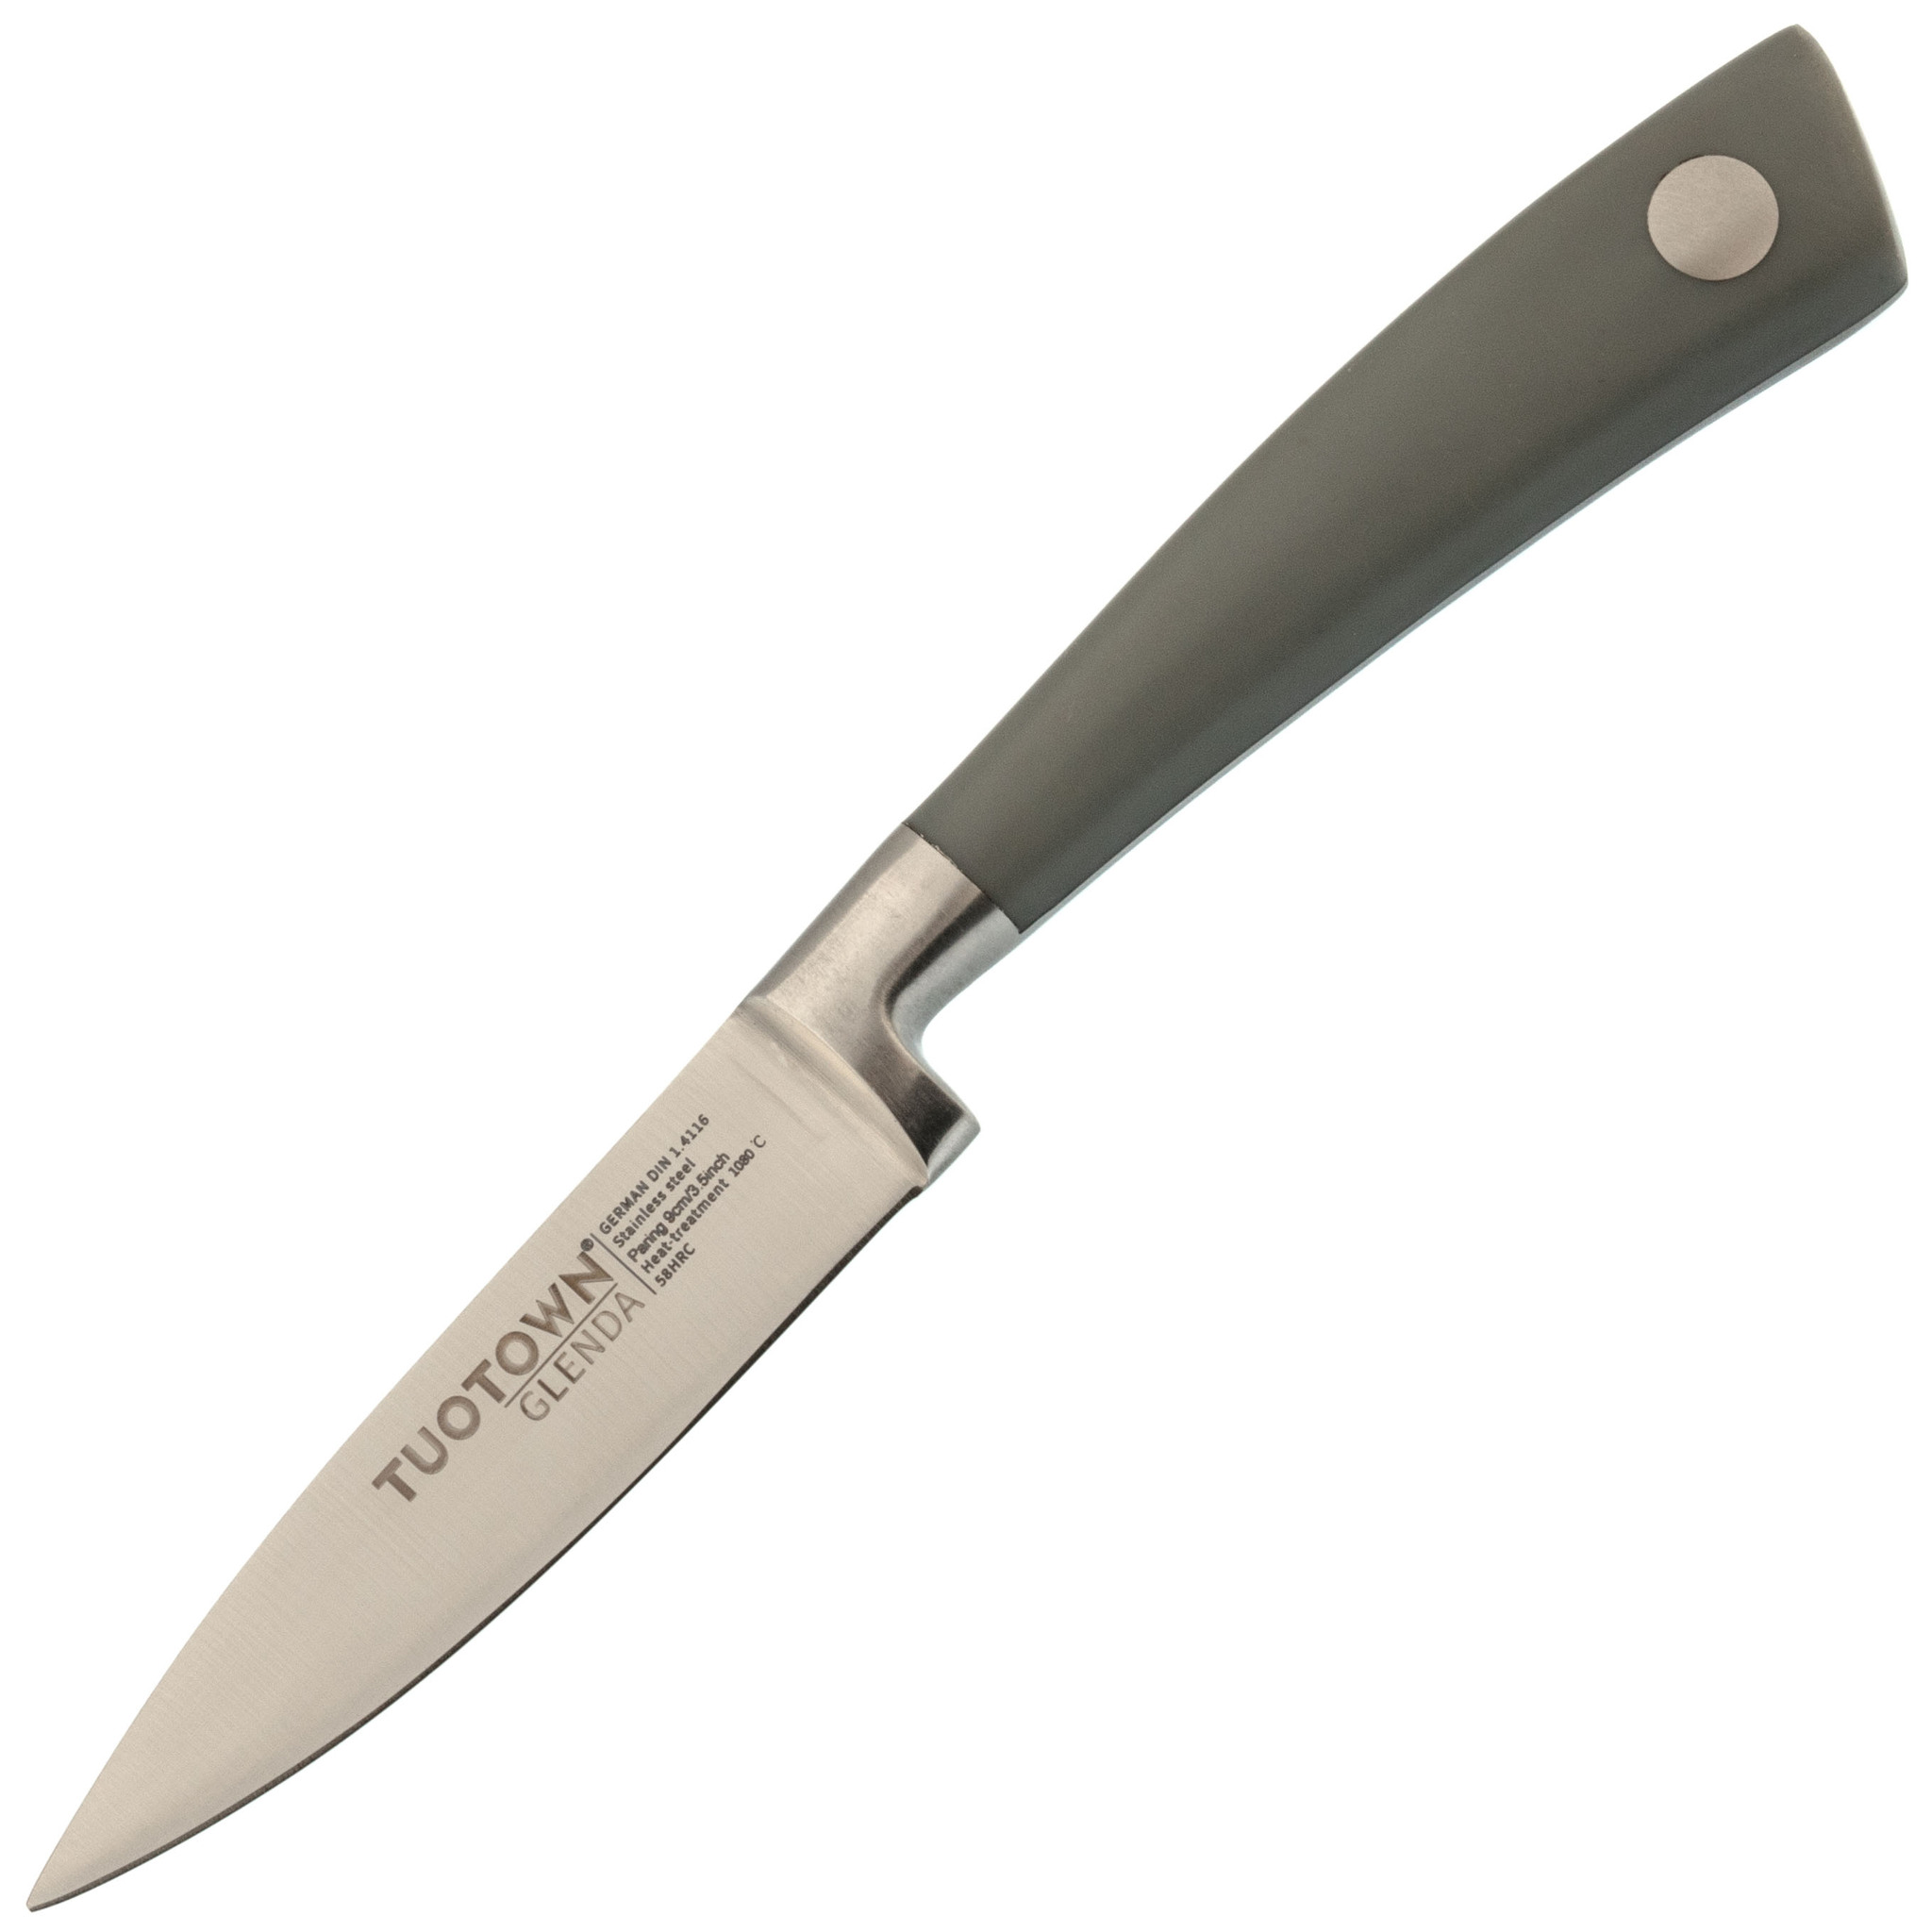 Кухонный нож овощной Tuotown, сталь 1.4116, пластик